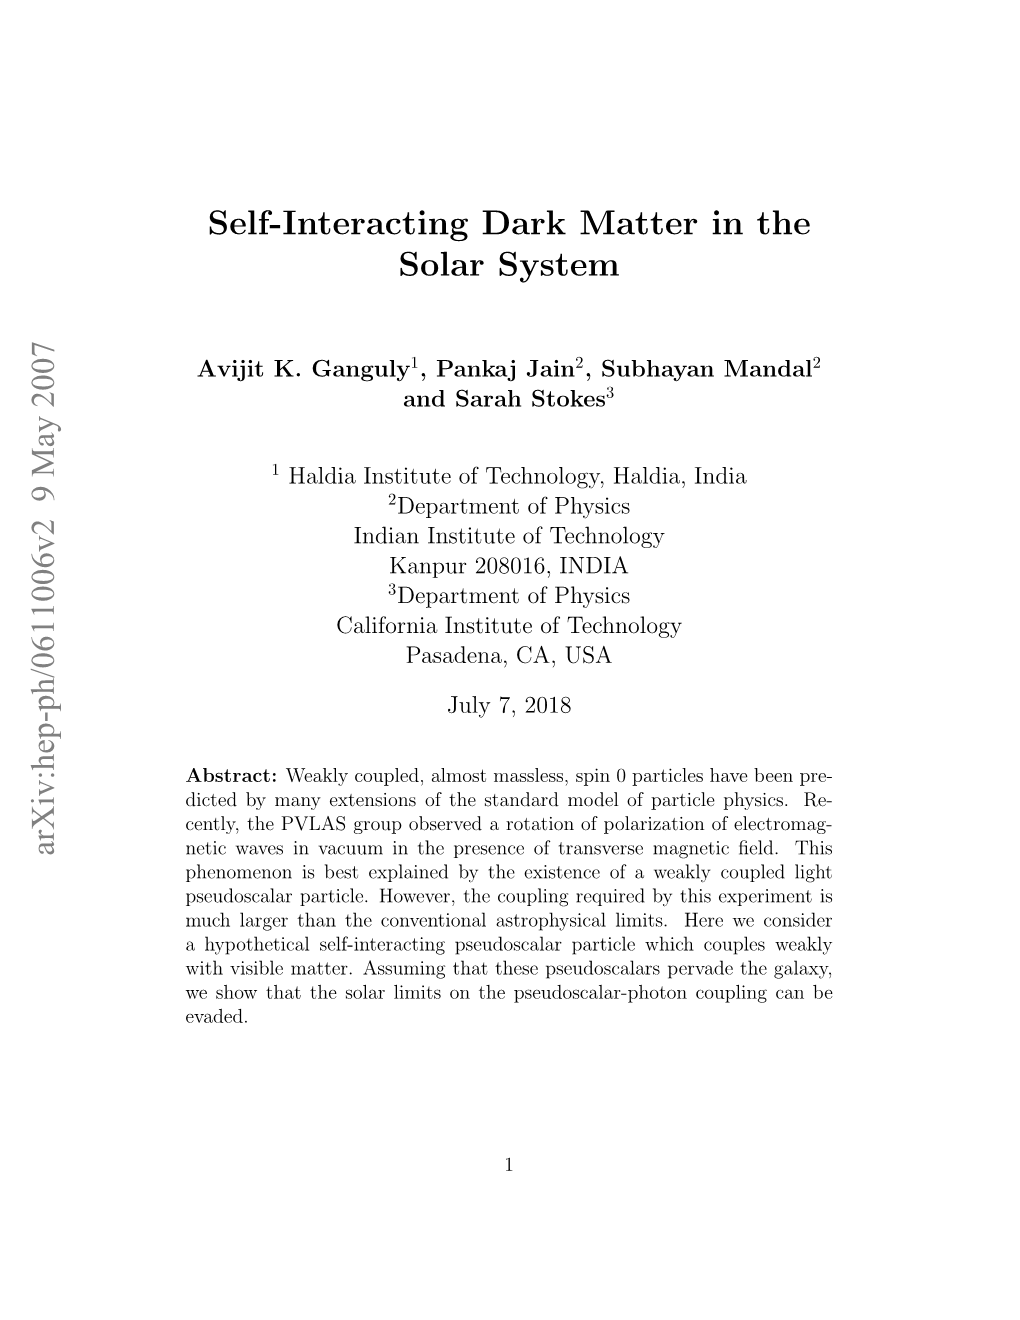 Self Interacting Dark Matter in the Solar System